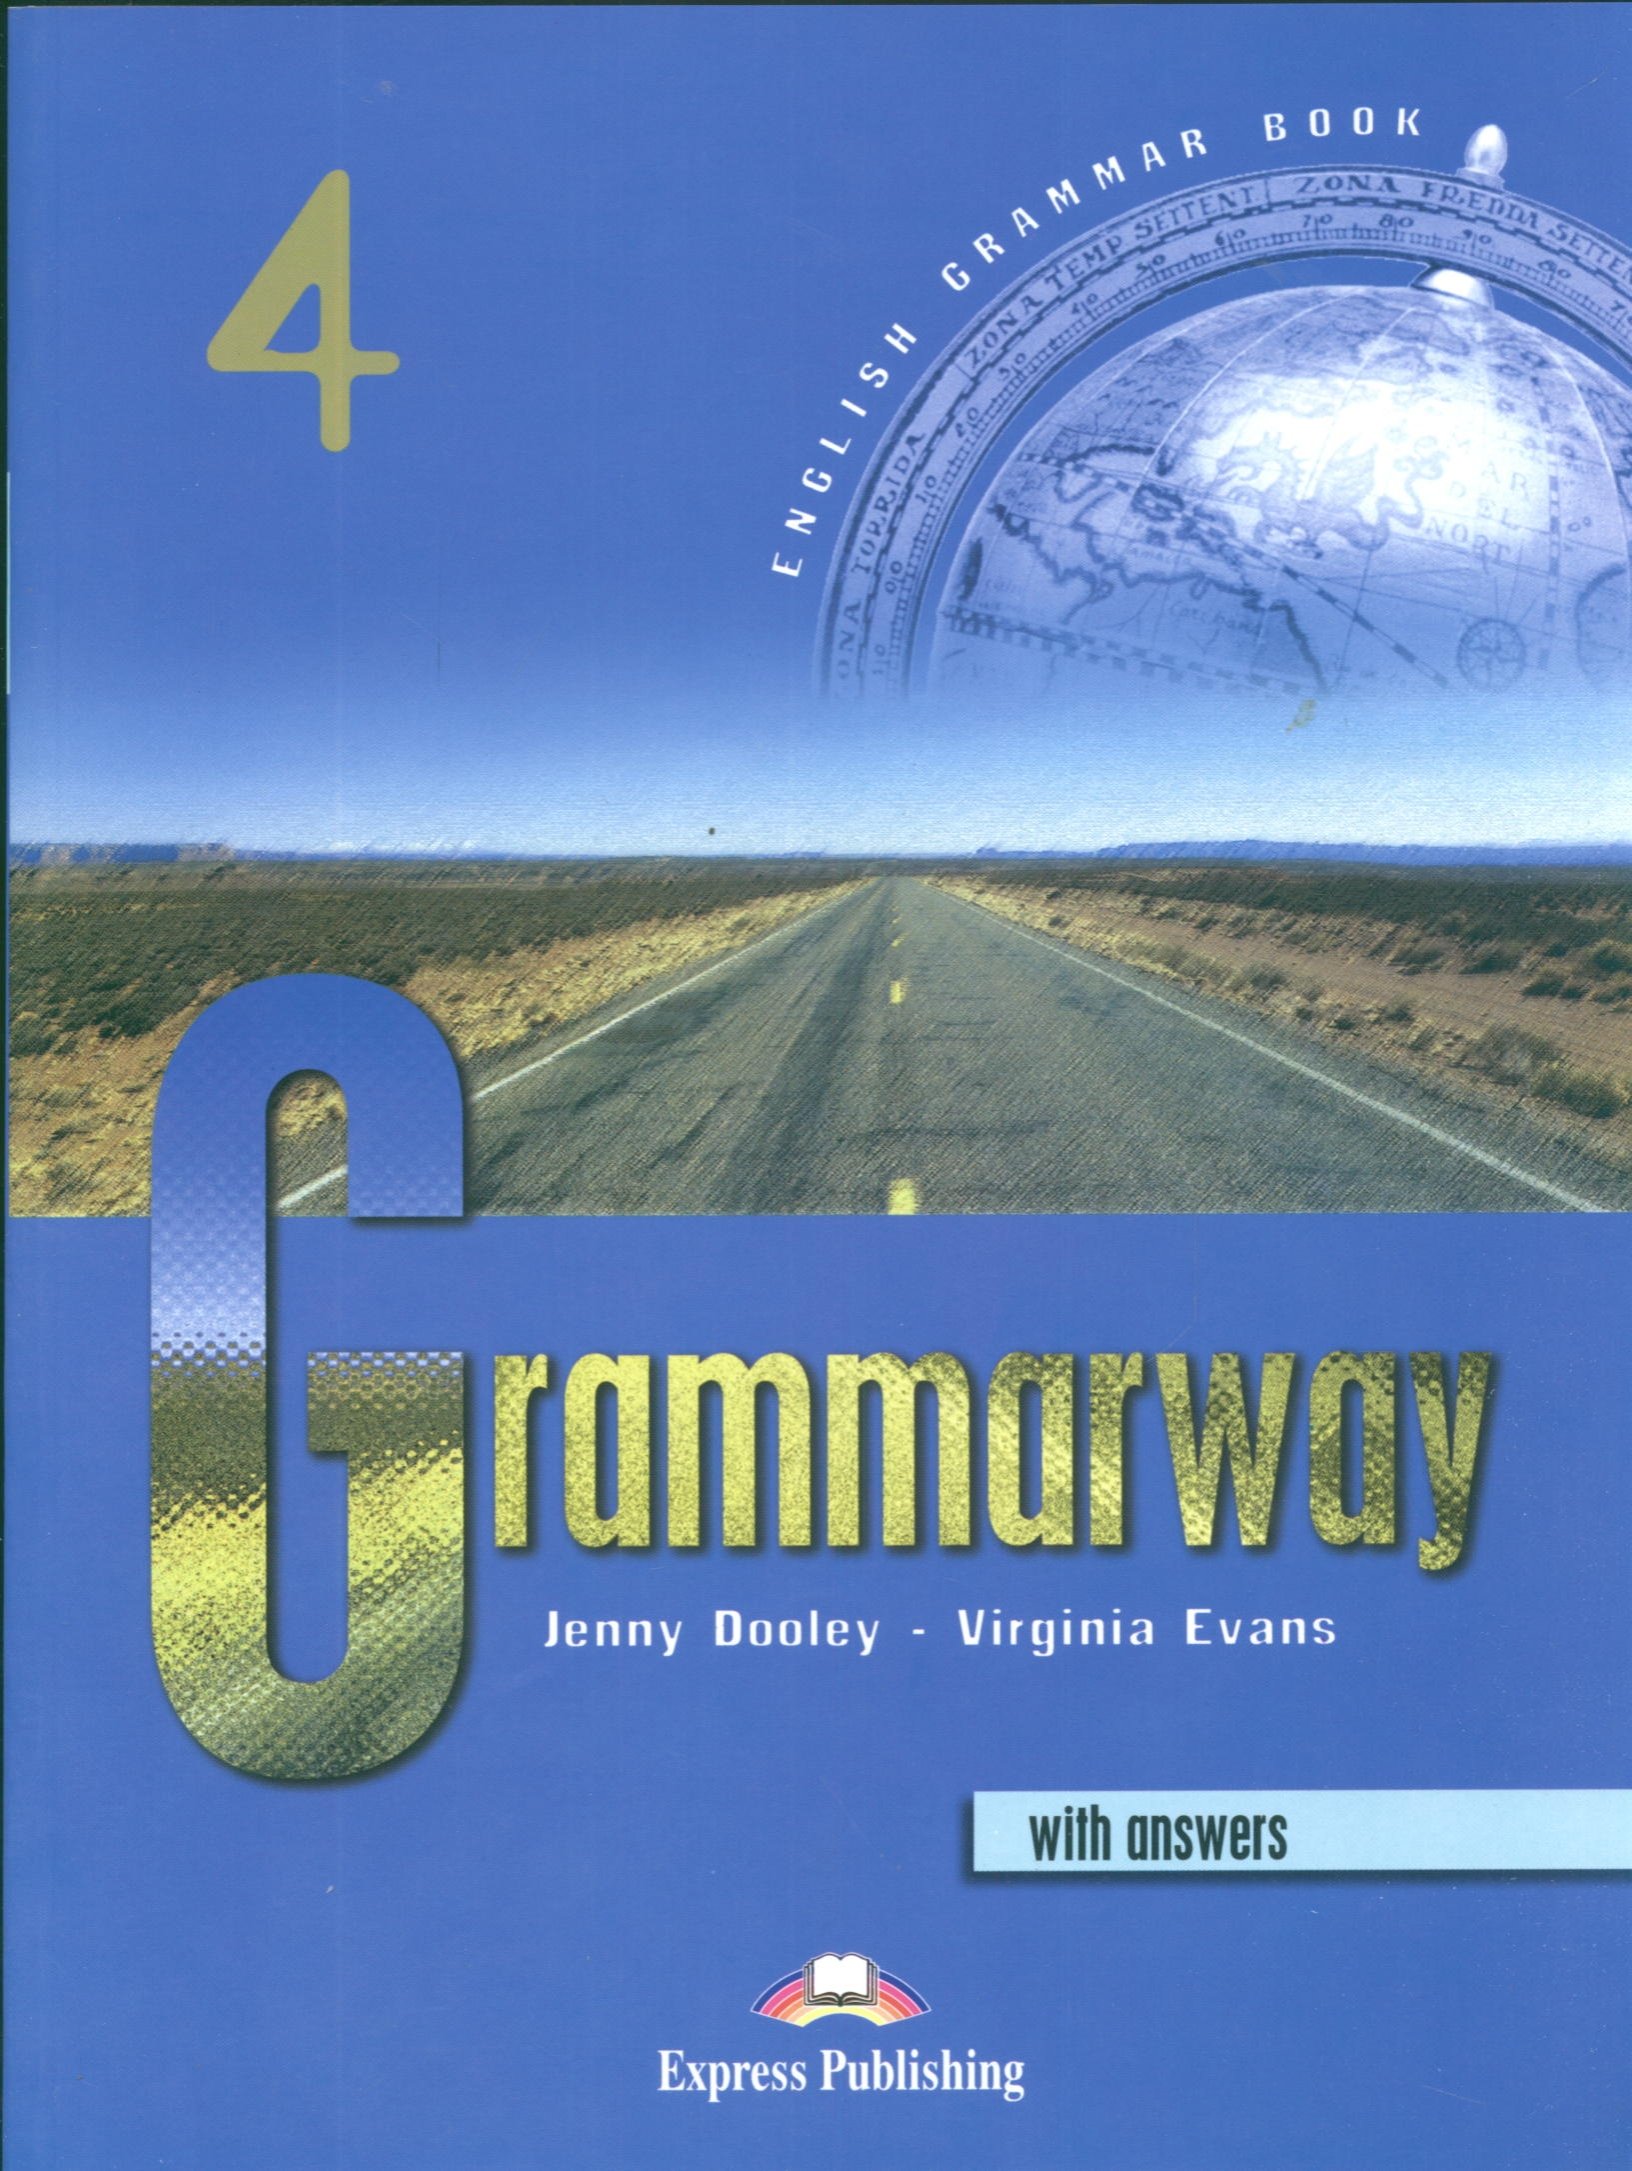 GRAMMARWAY 4 English Grammar Book with answers